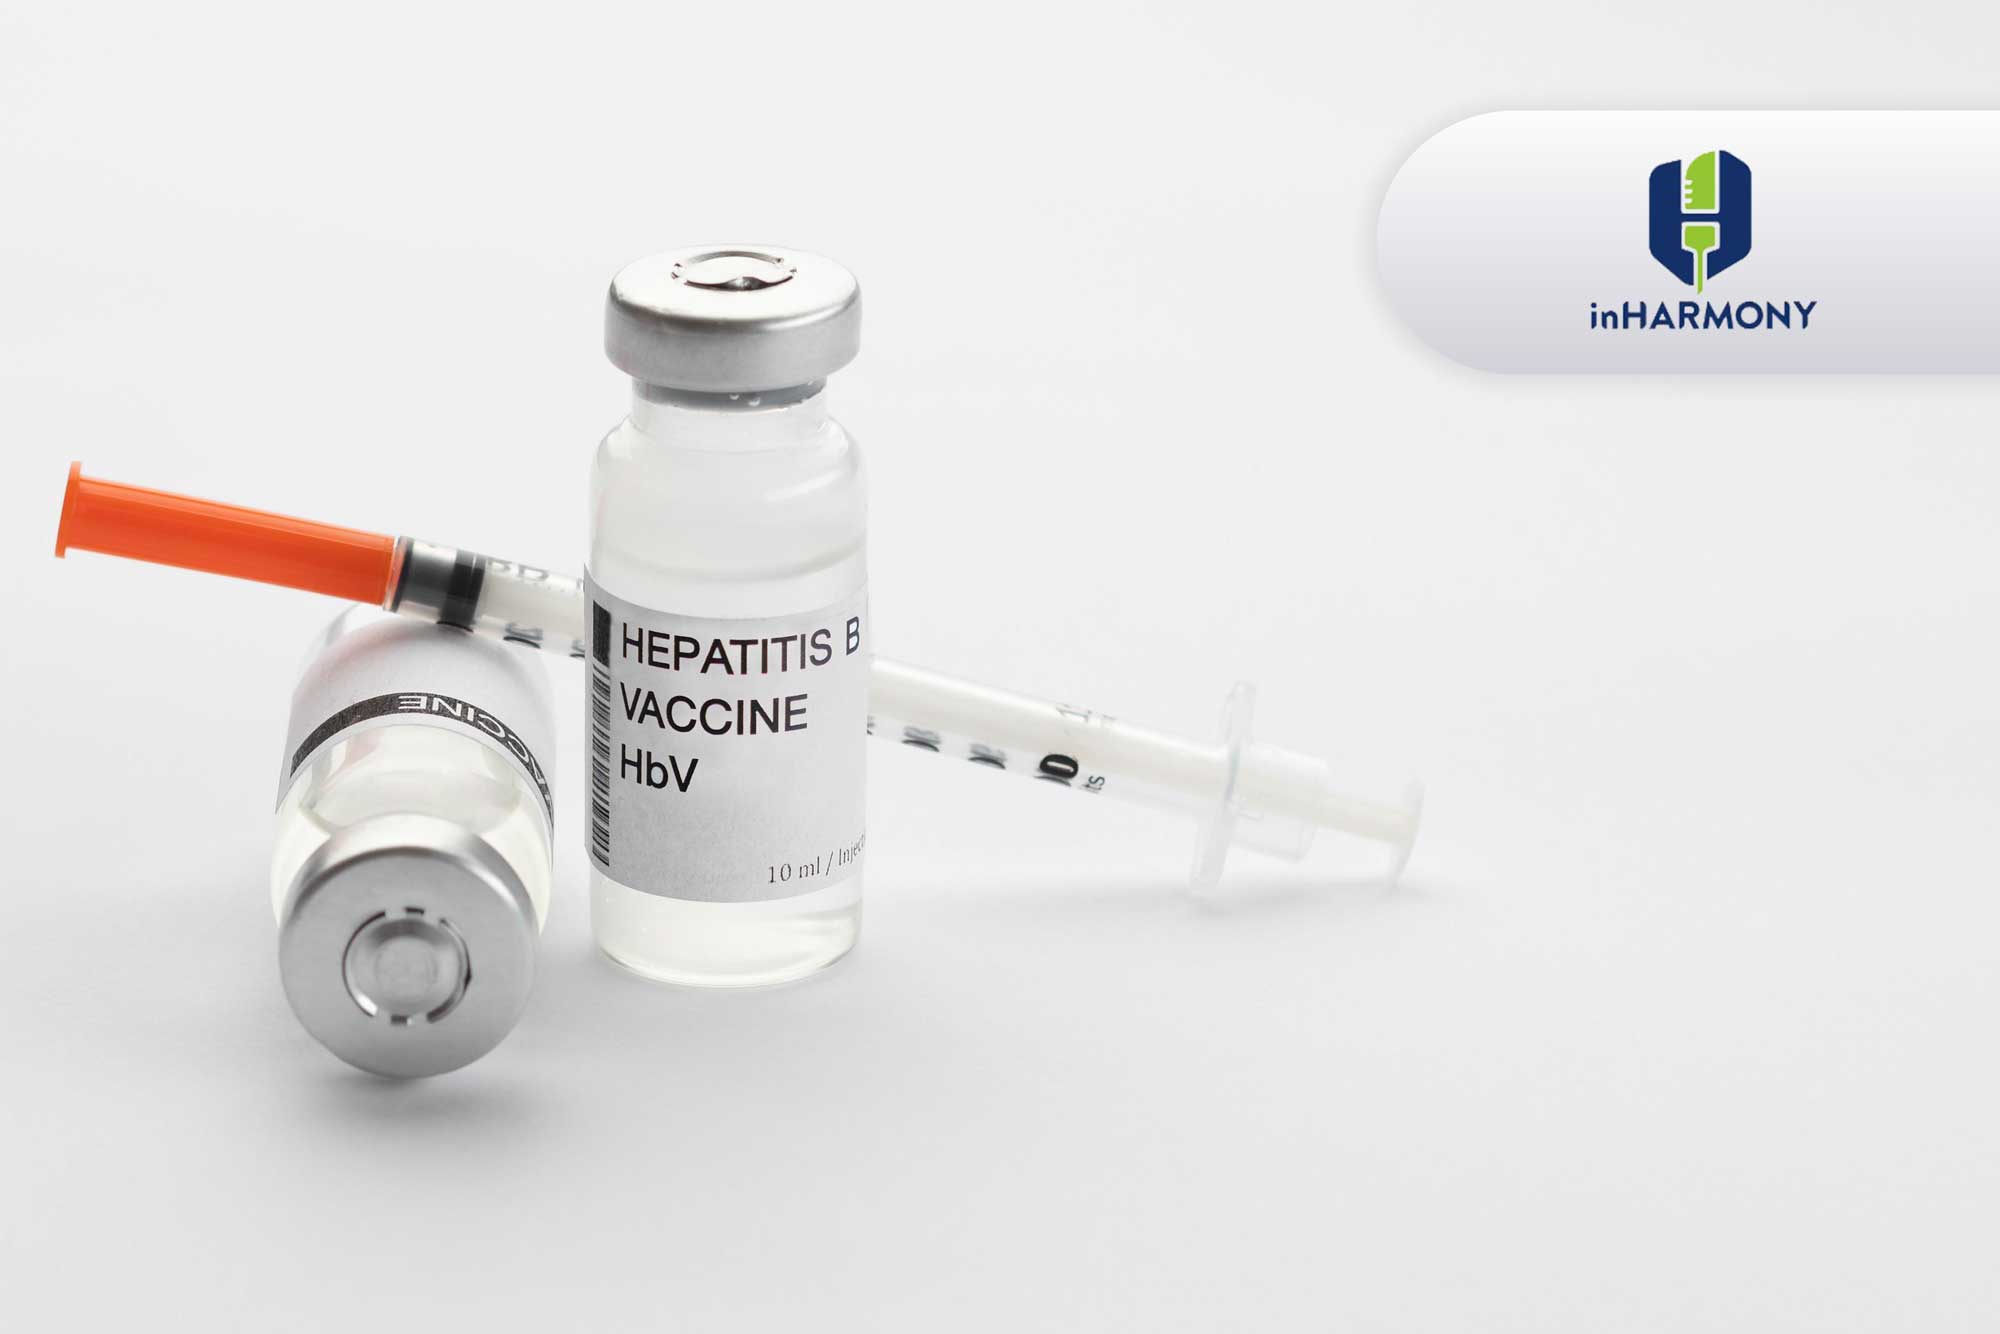 vaksin-hepatitis-B-inharmony_1691389227.jpg